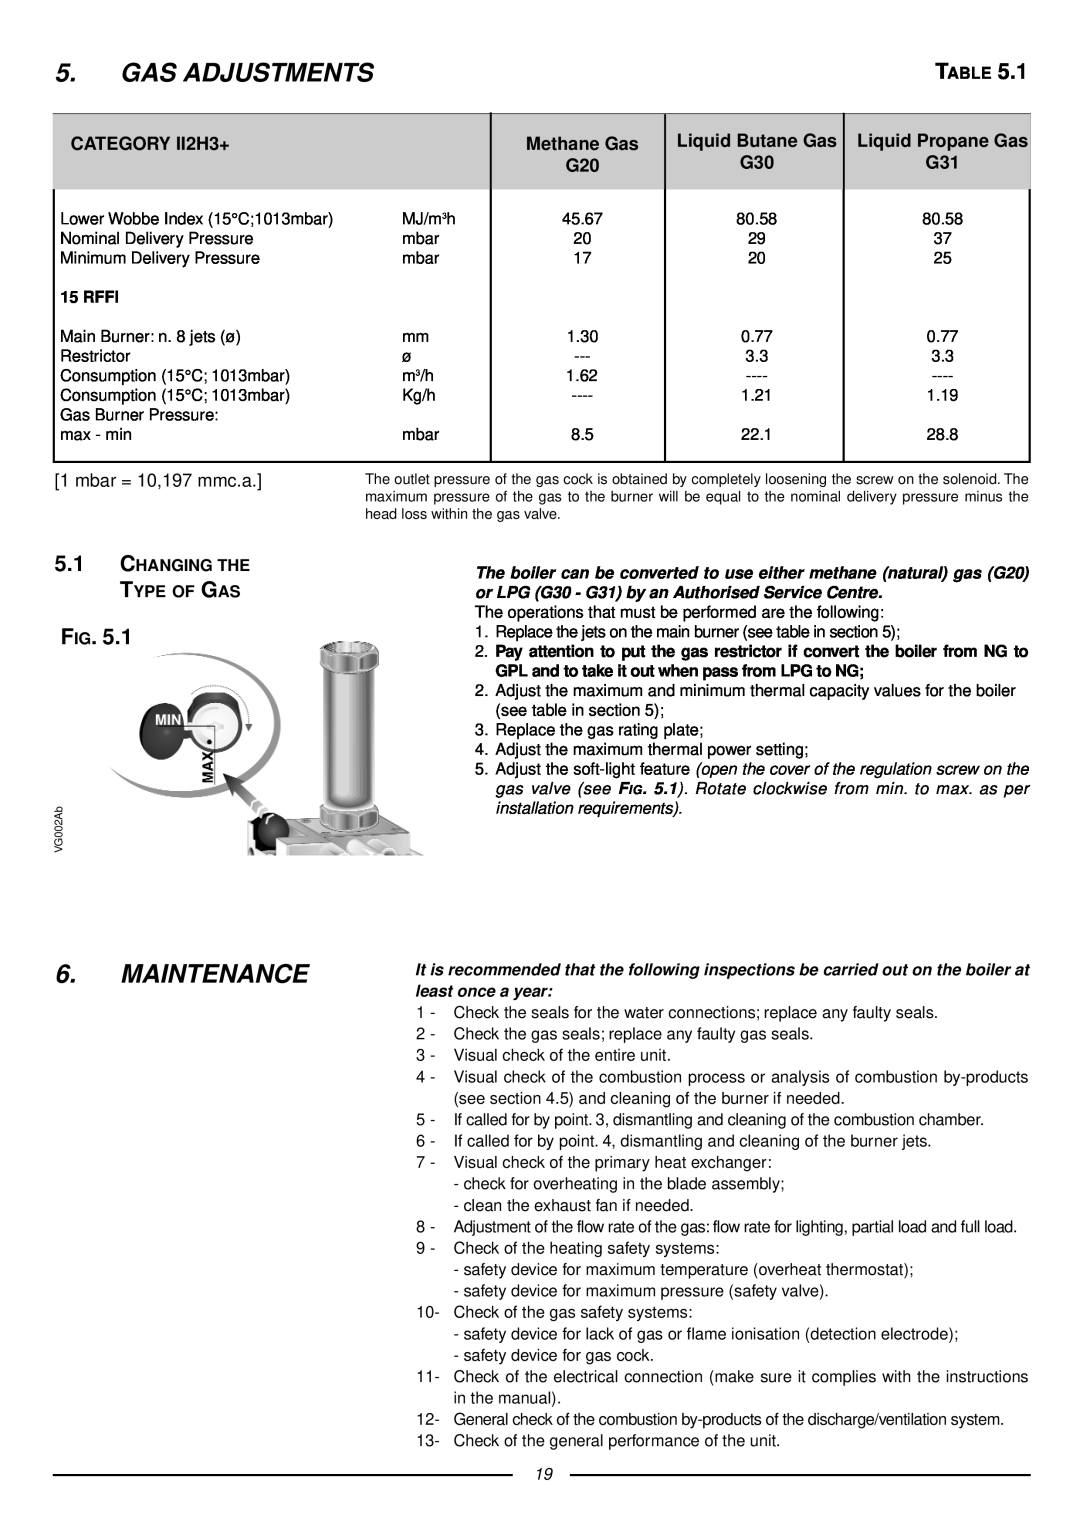 Ariston 41-116-05 Gas Adjustments, Maintenance, CATEGORY II2H3+, Methane Gas G20, Liquid Butane Gas 